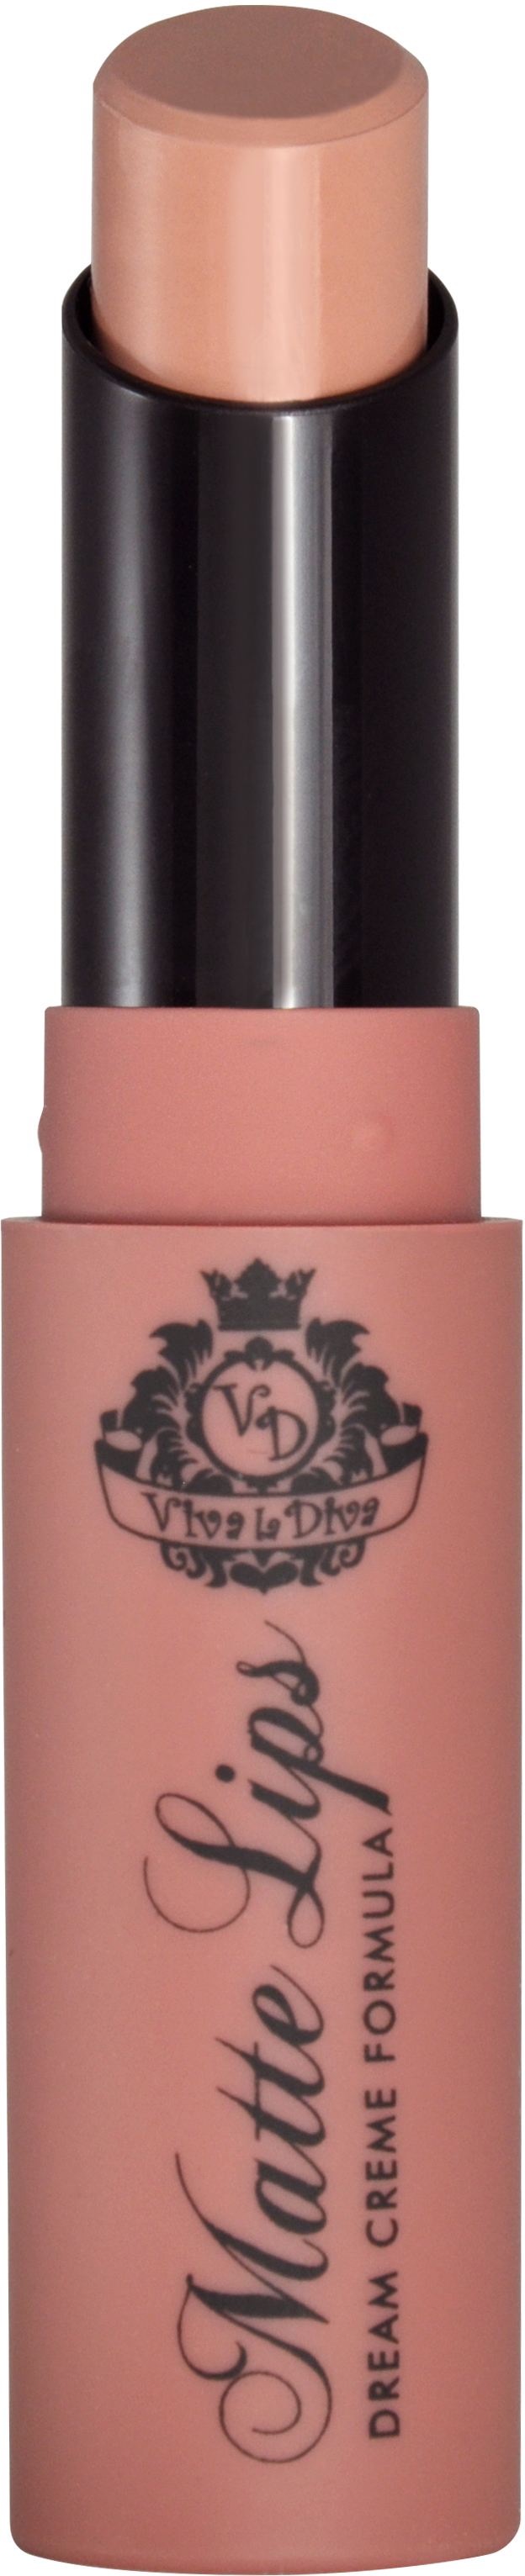 Viva la Diva Matte Lipstick 301 Velvet Nude